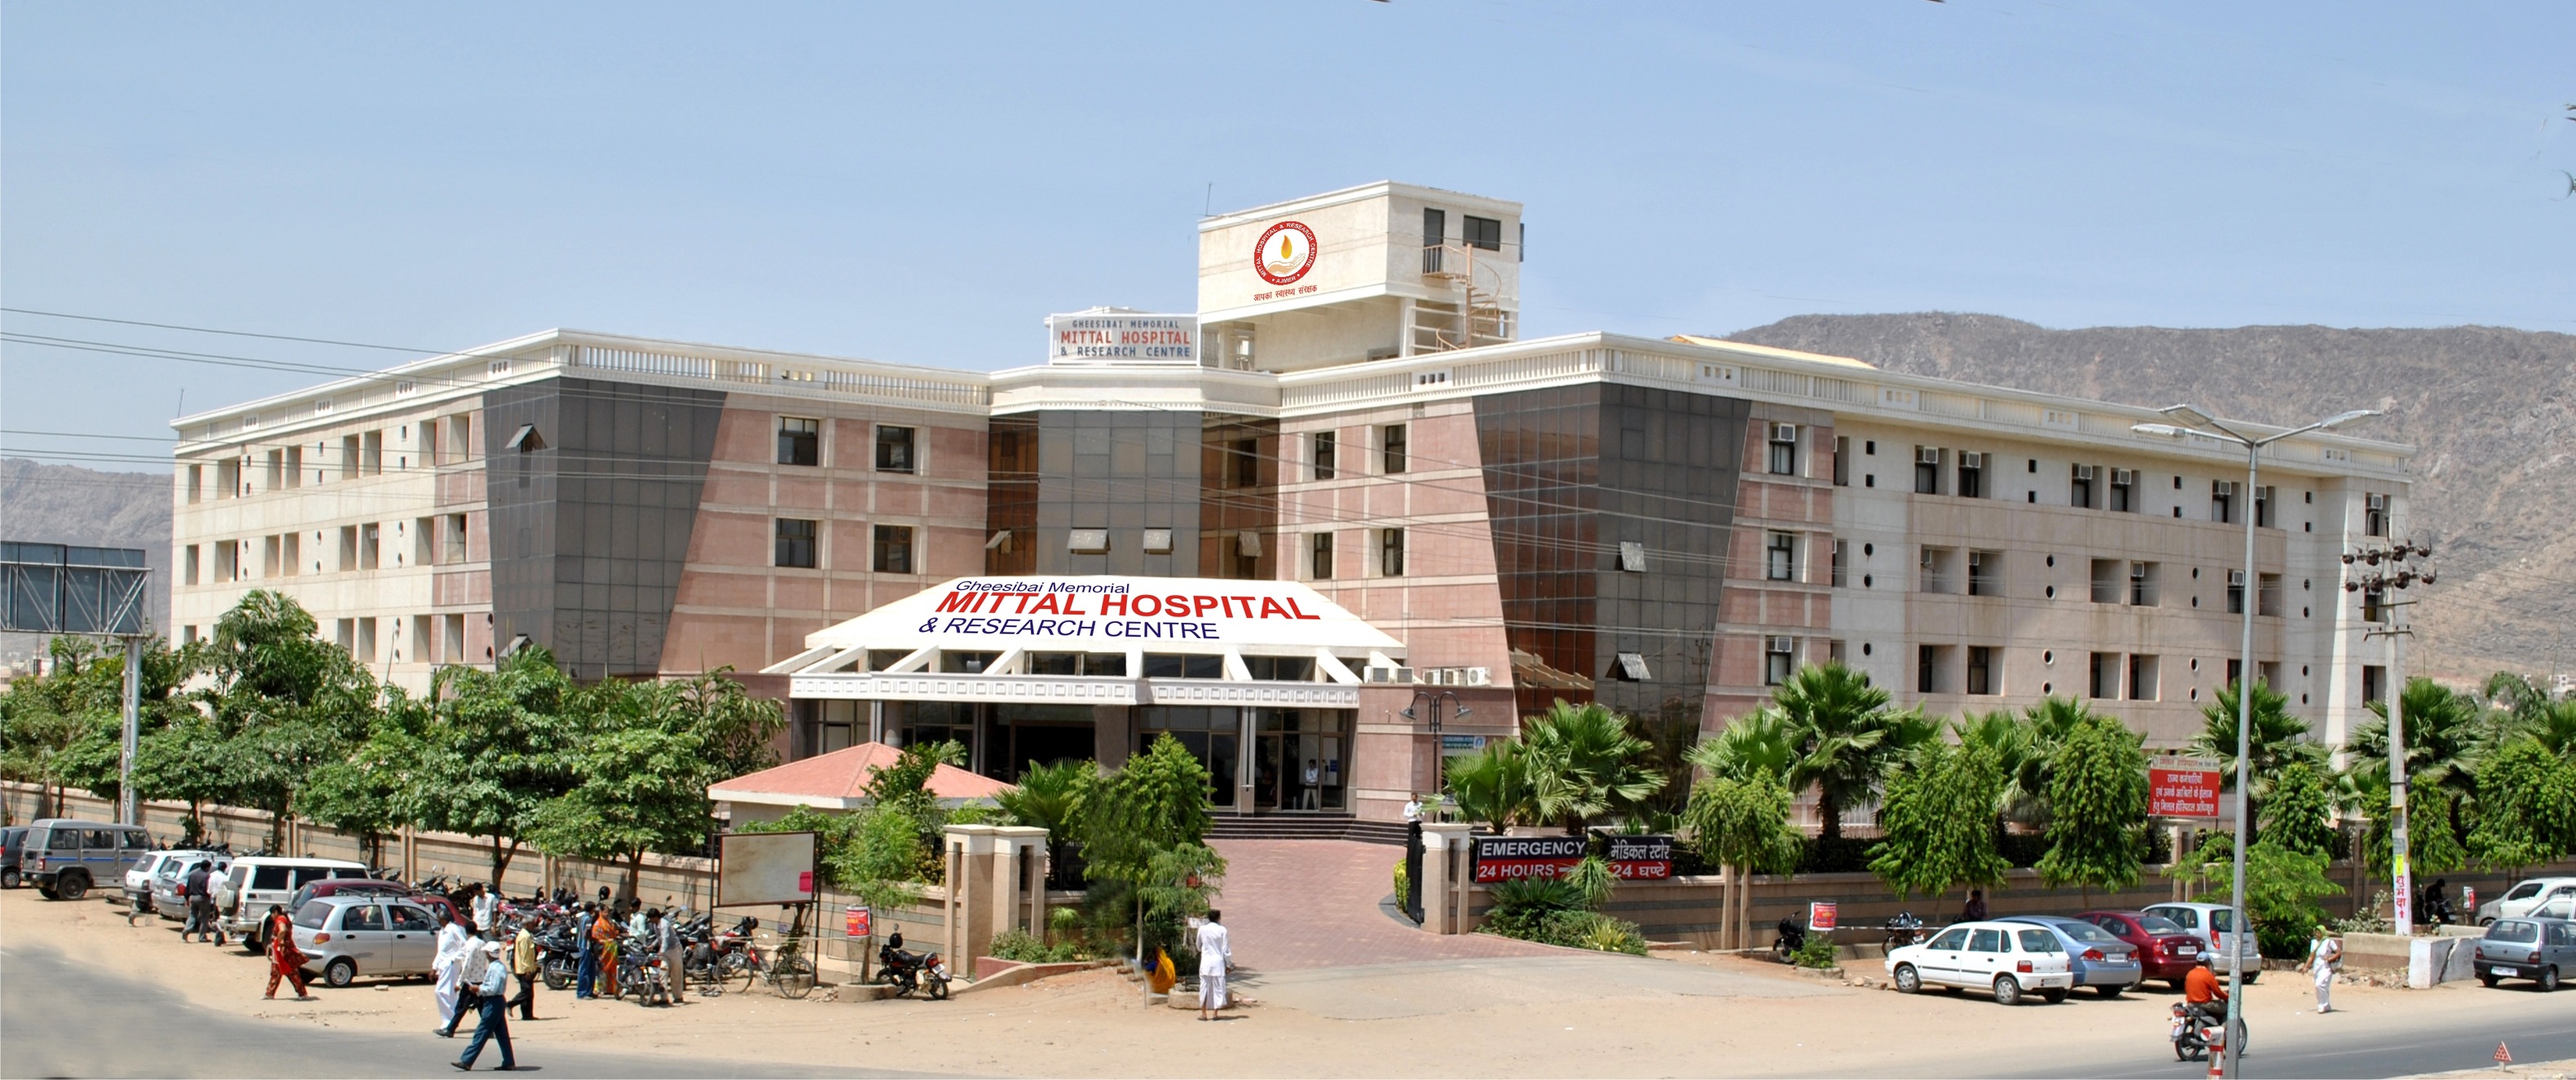 Gheesi Bai Memorial Mittal Hospital And Research Centre